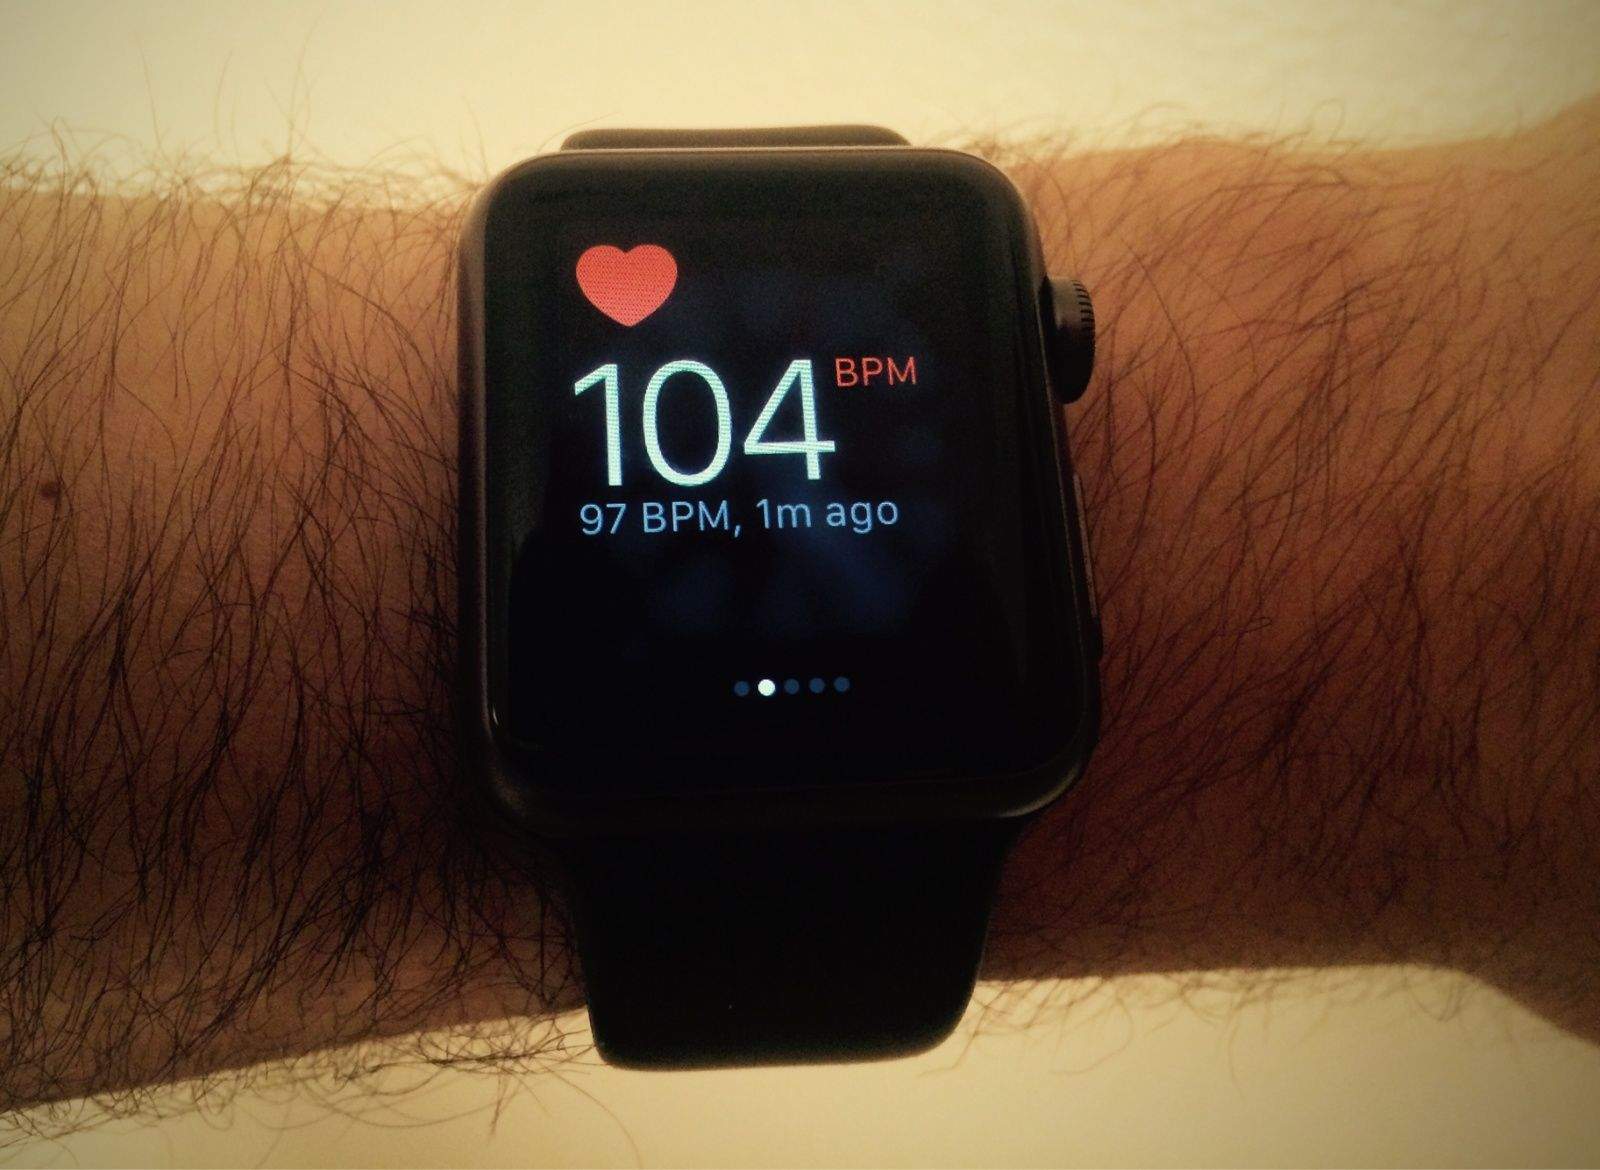 Apple Watch alerts user of irregular heart rhythms in sleep